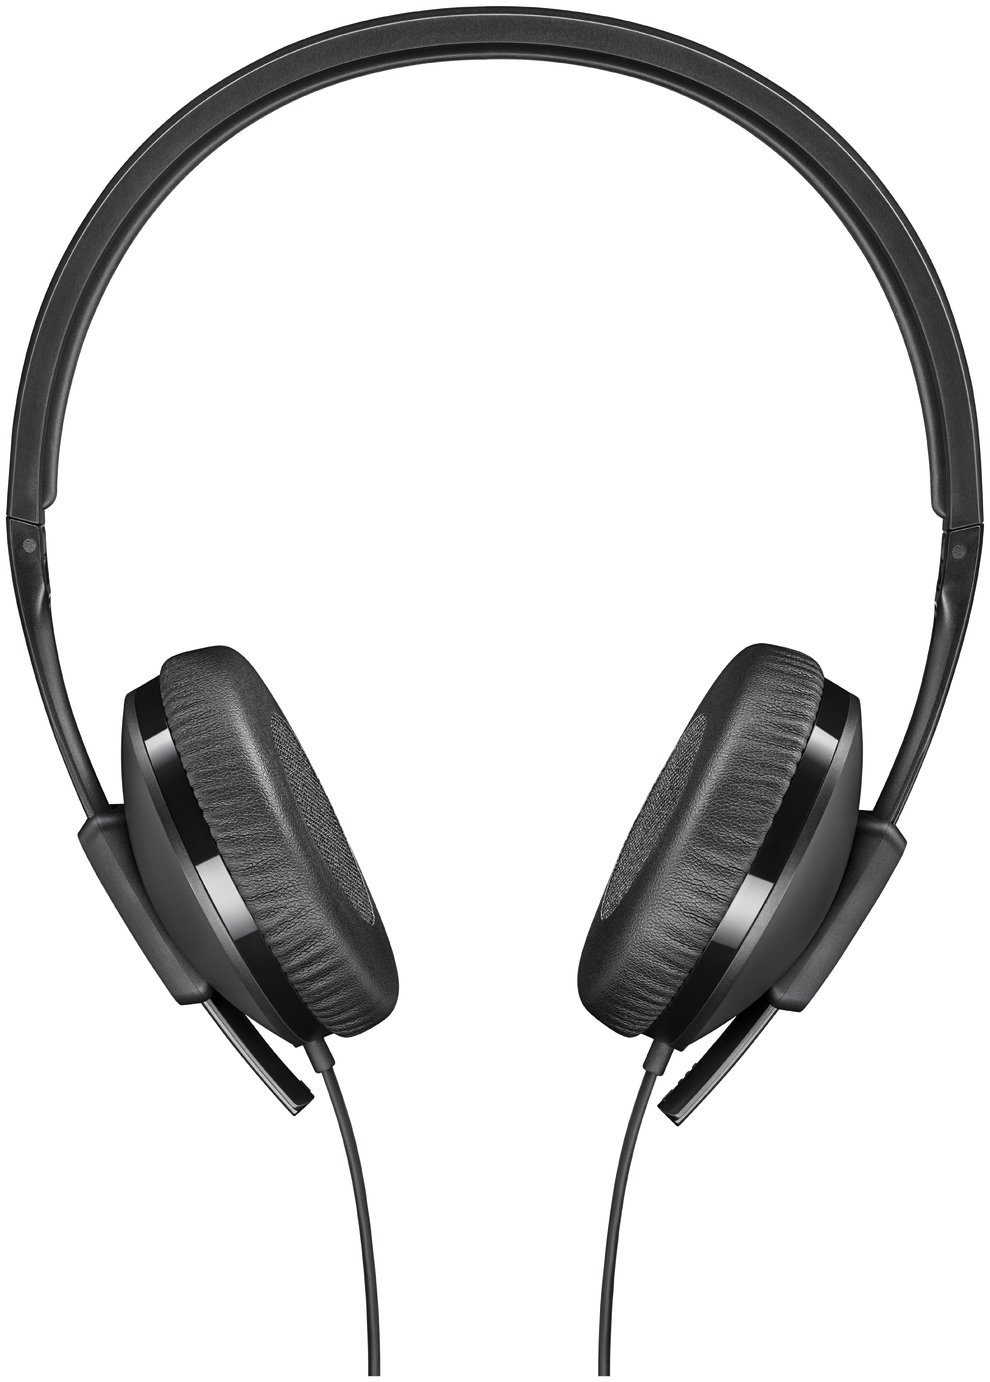 Sennheiser HD100 On-Ear Headphones Review